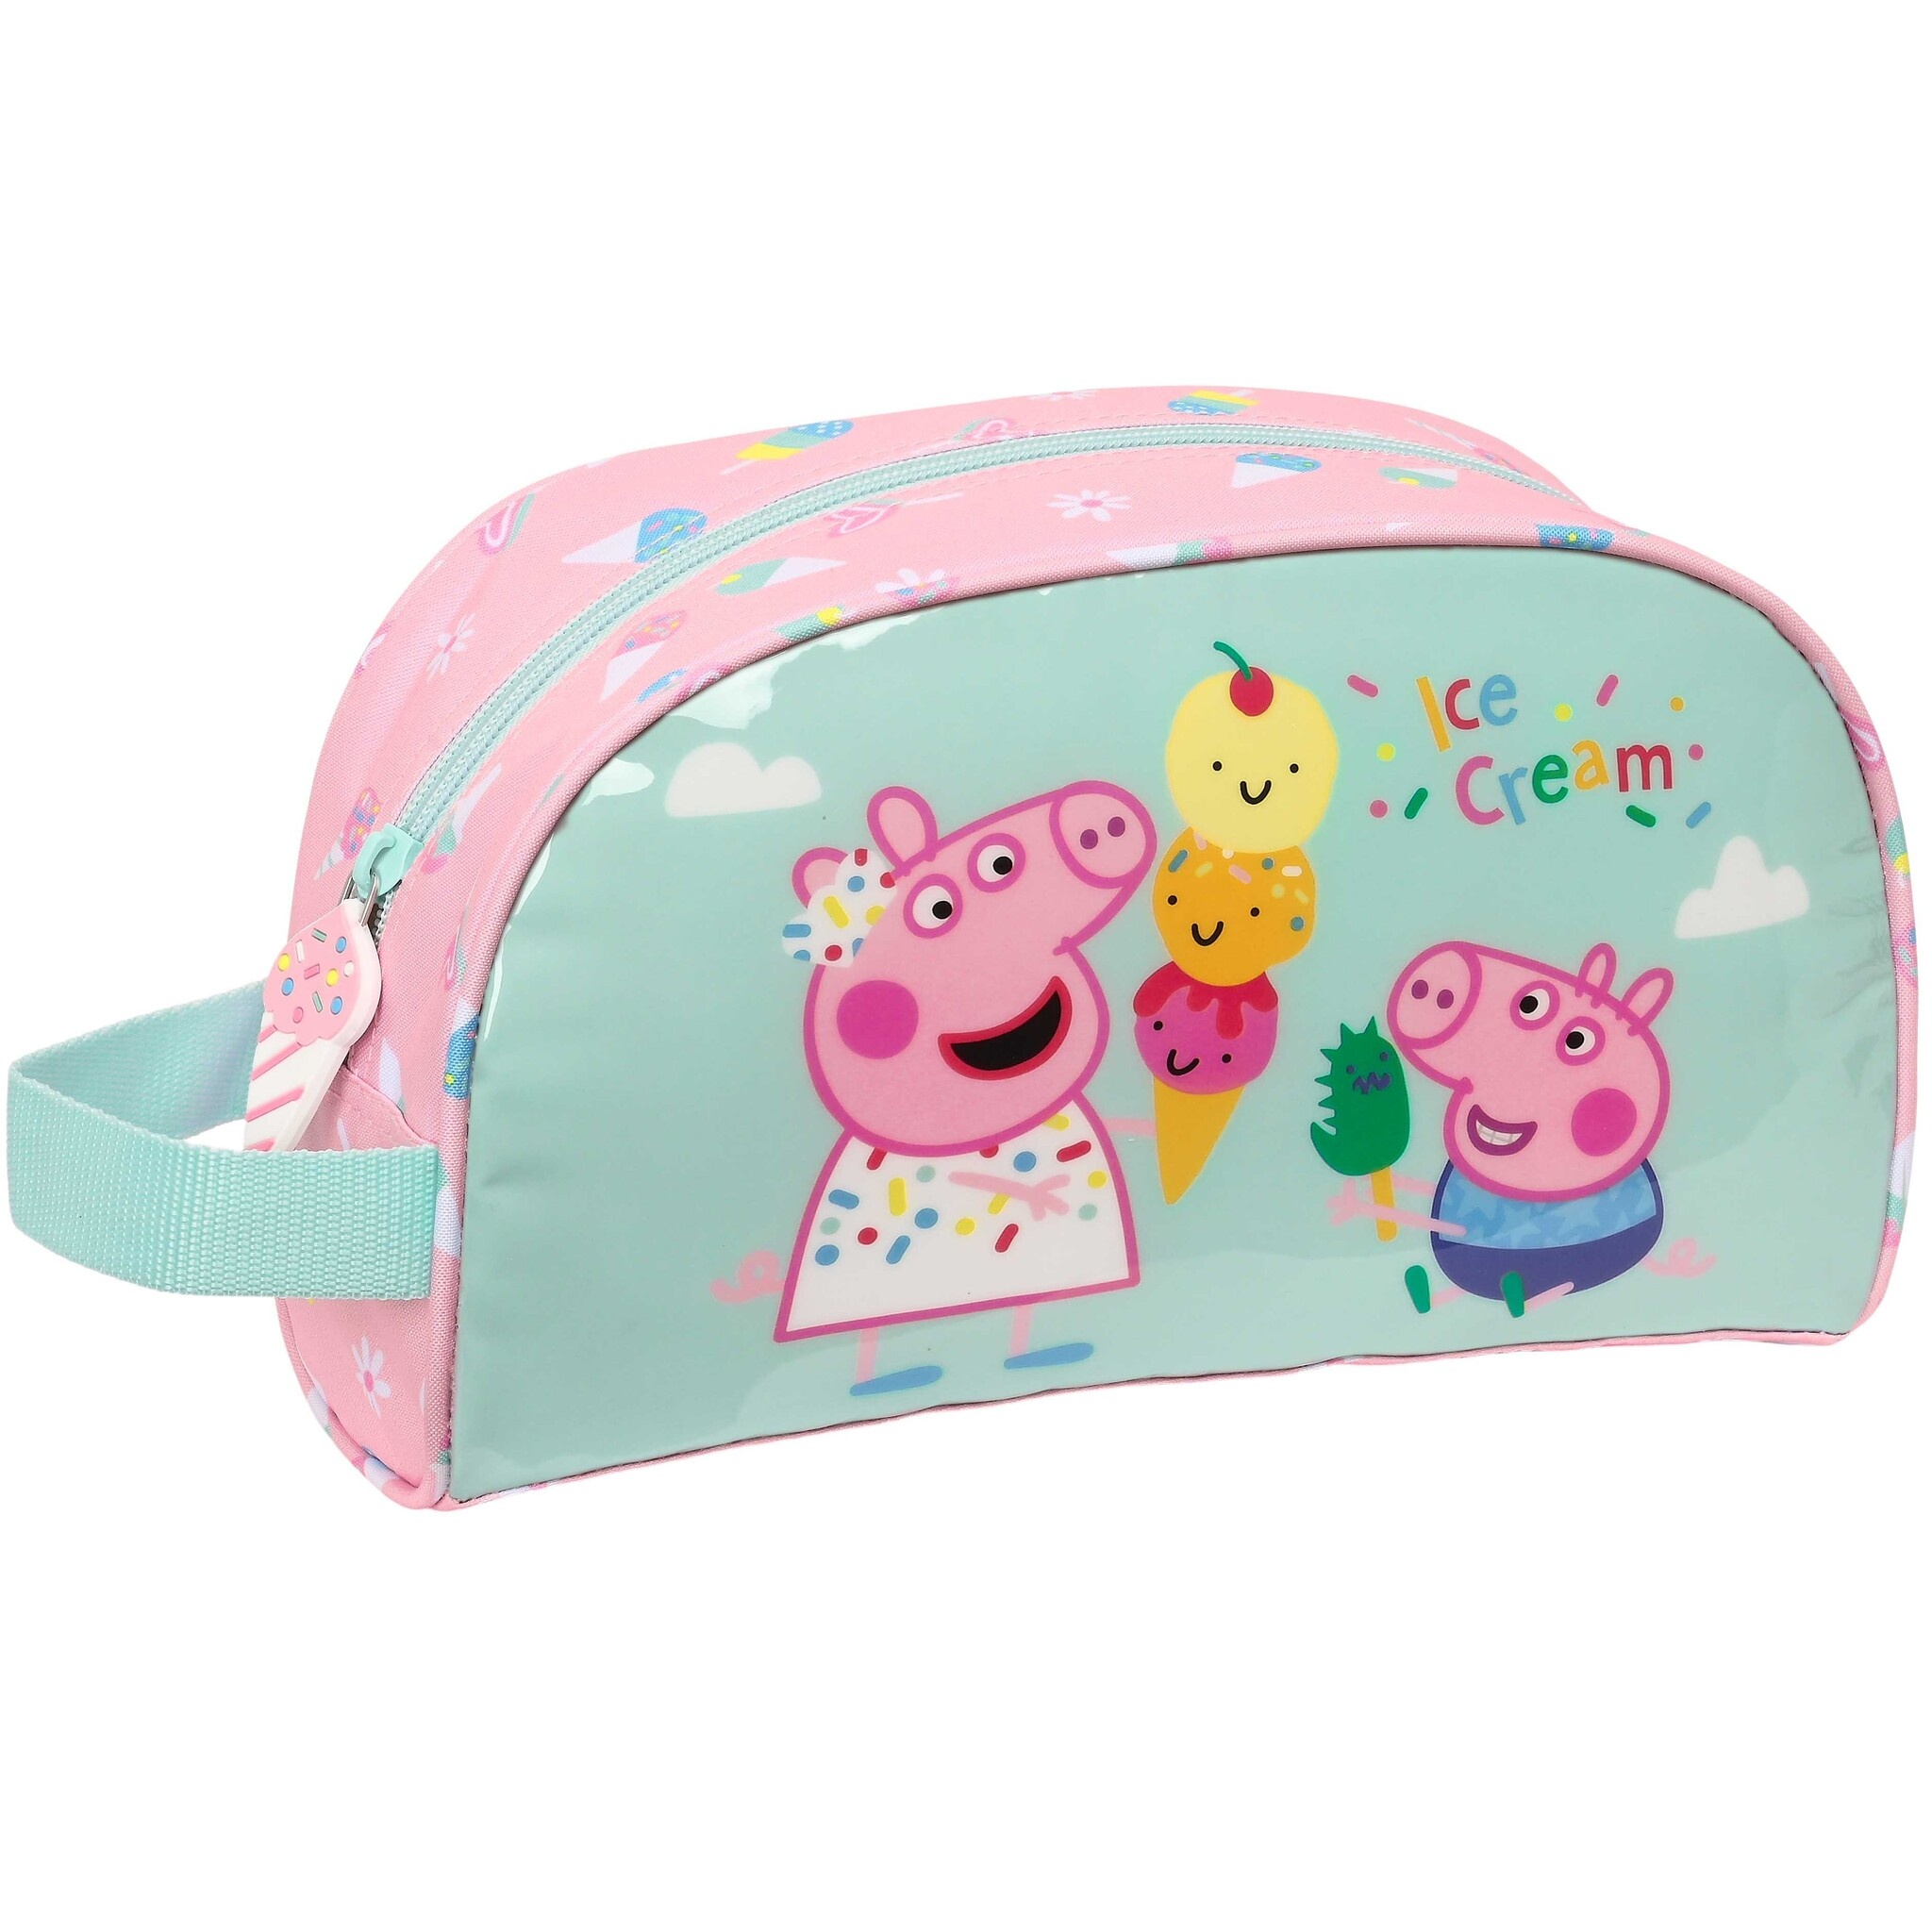 Peppa Pig Toiletry bag, Ice Cream - 26 x 15 x 12 cm - Polyester